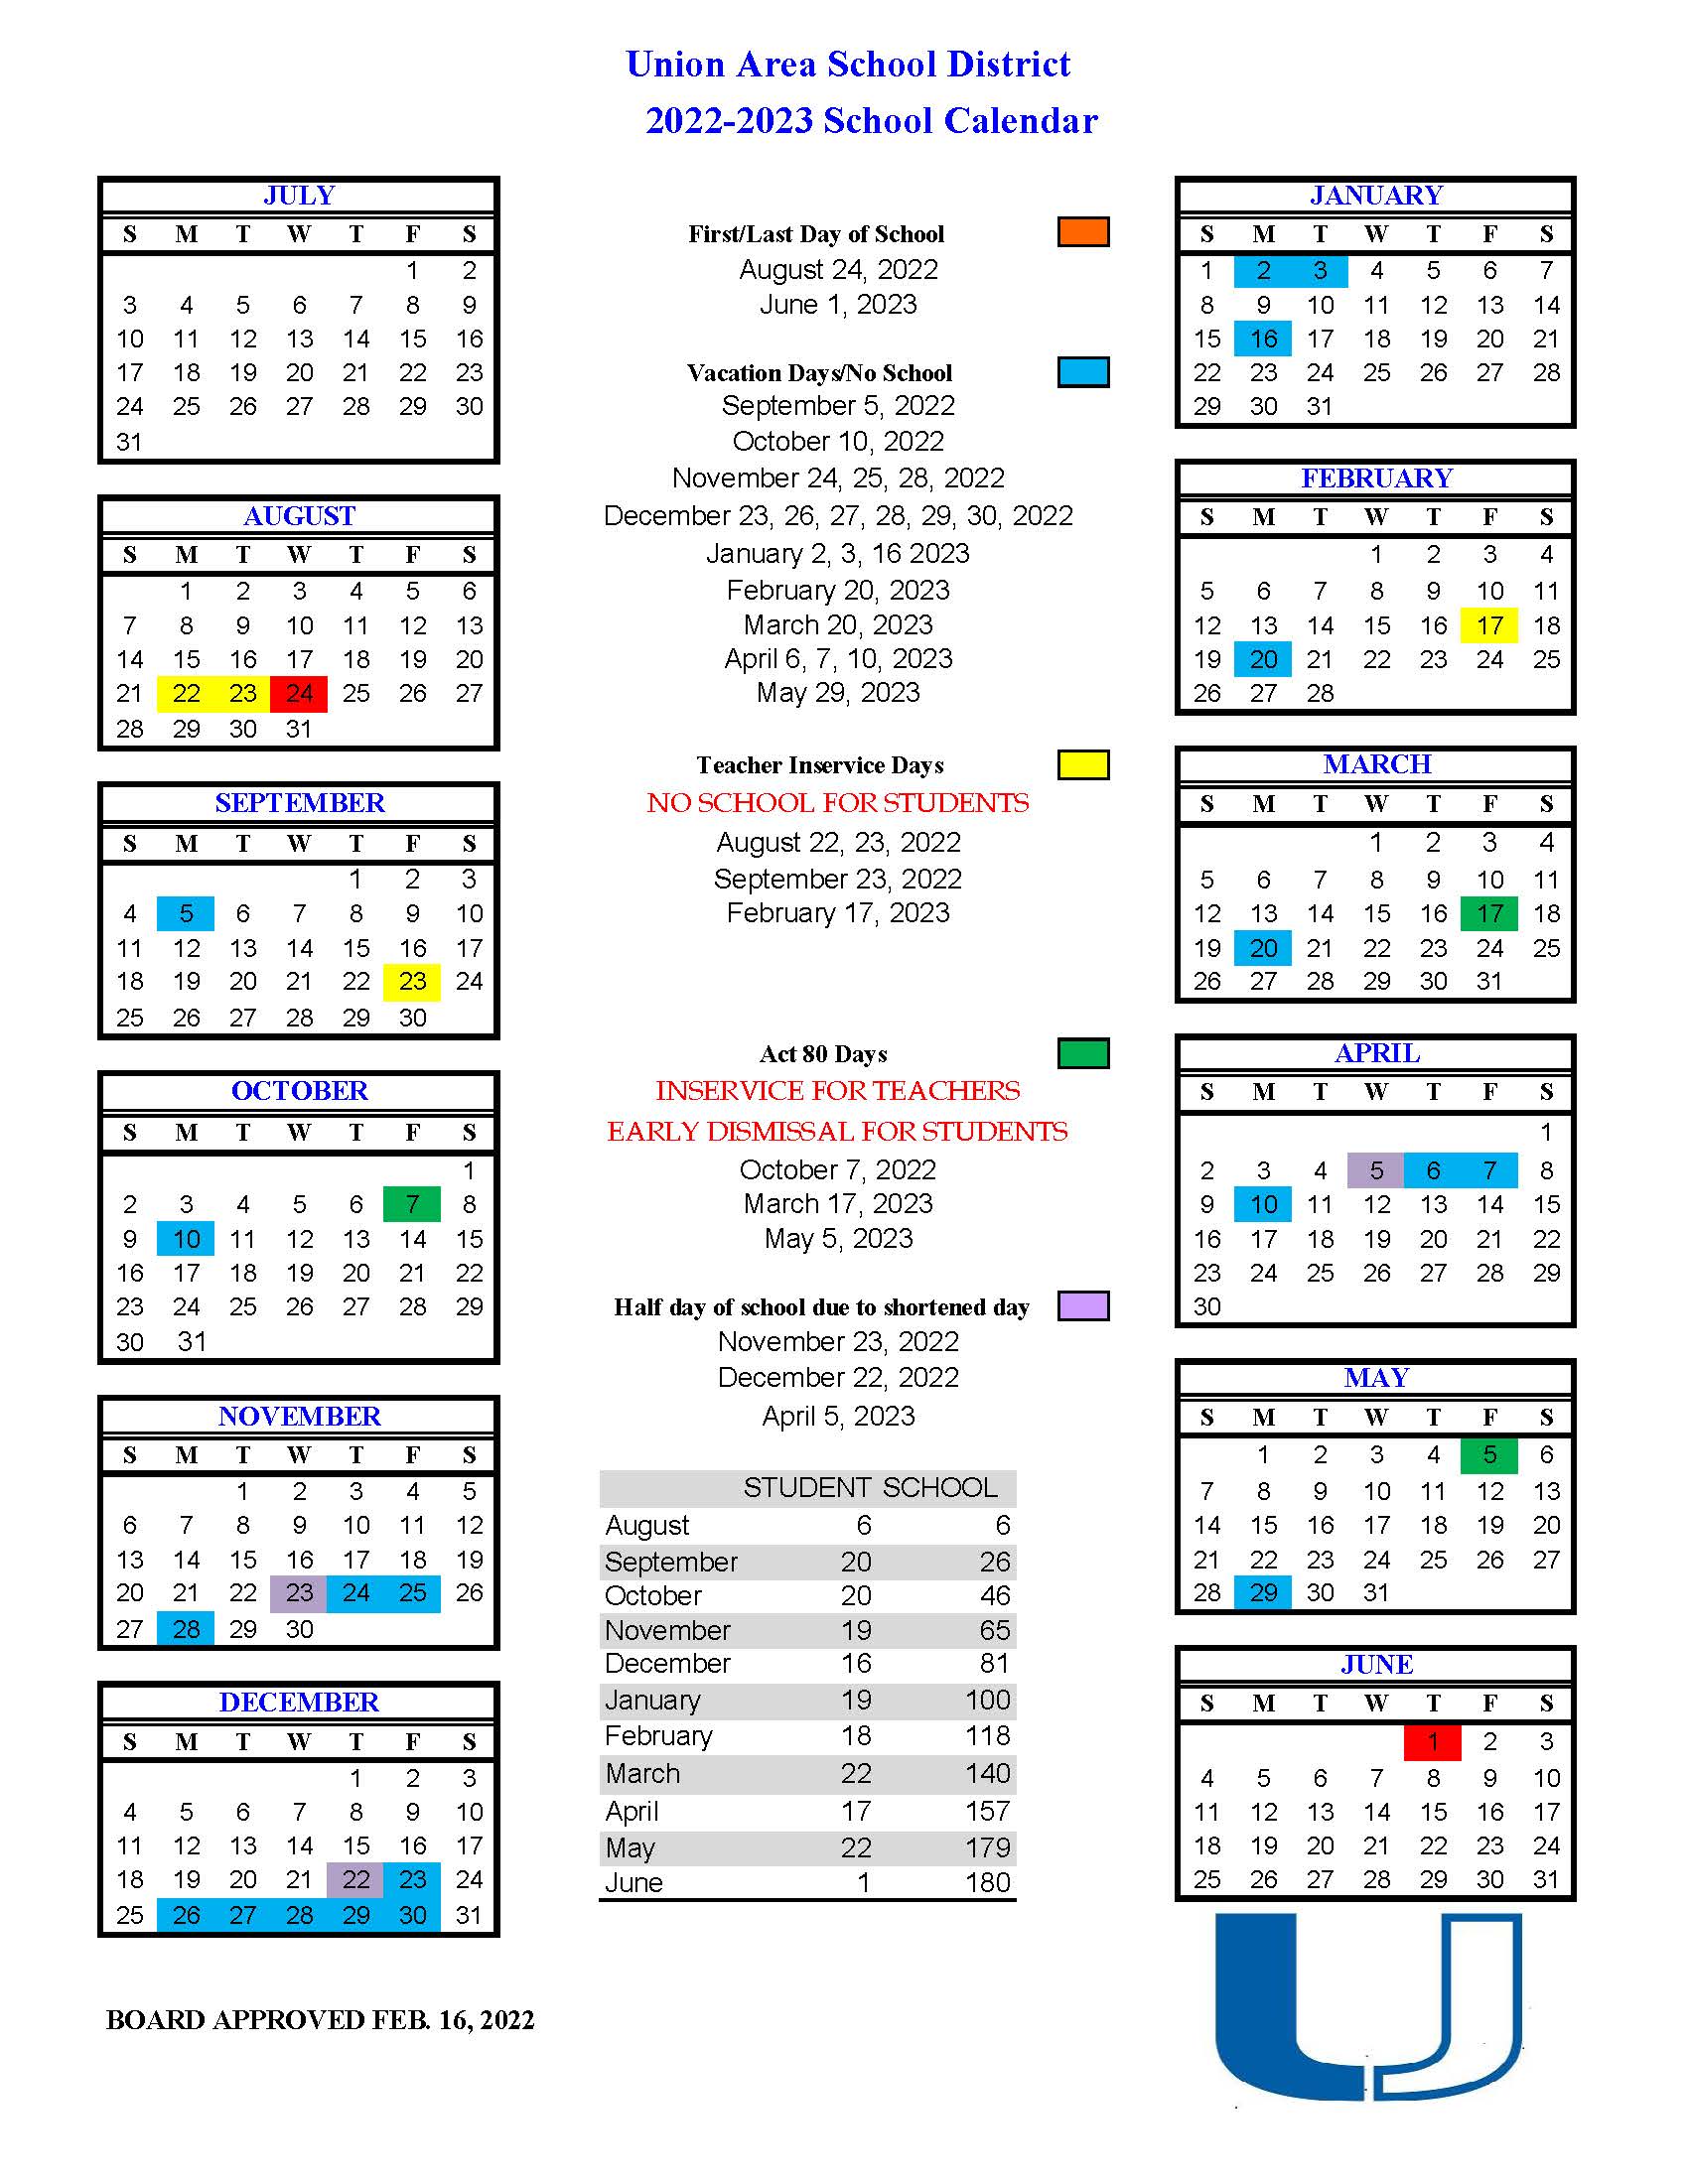 Union Area School District Calendar 2023 and 2024 - PublicHolidays.com